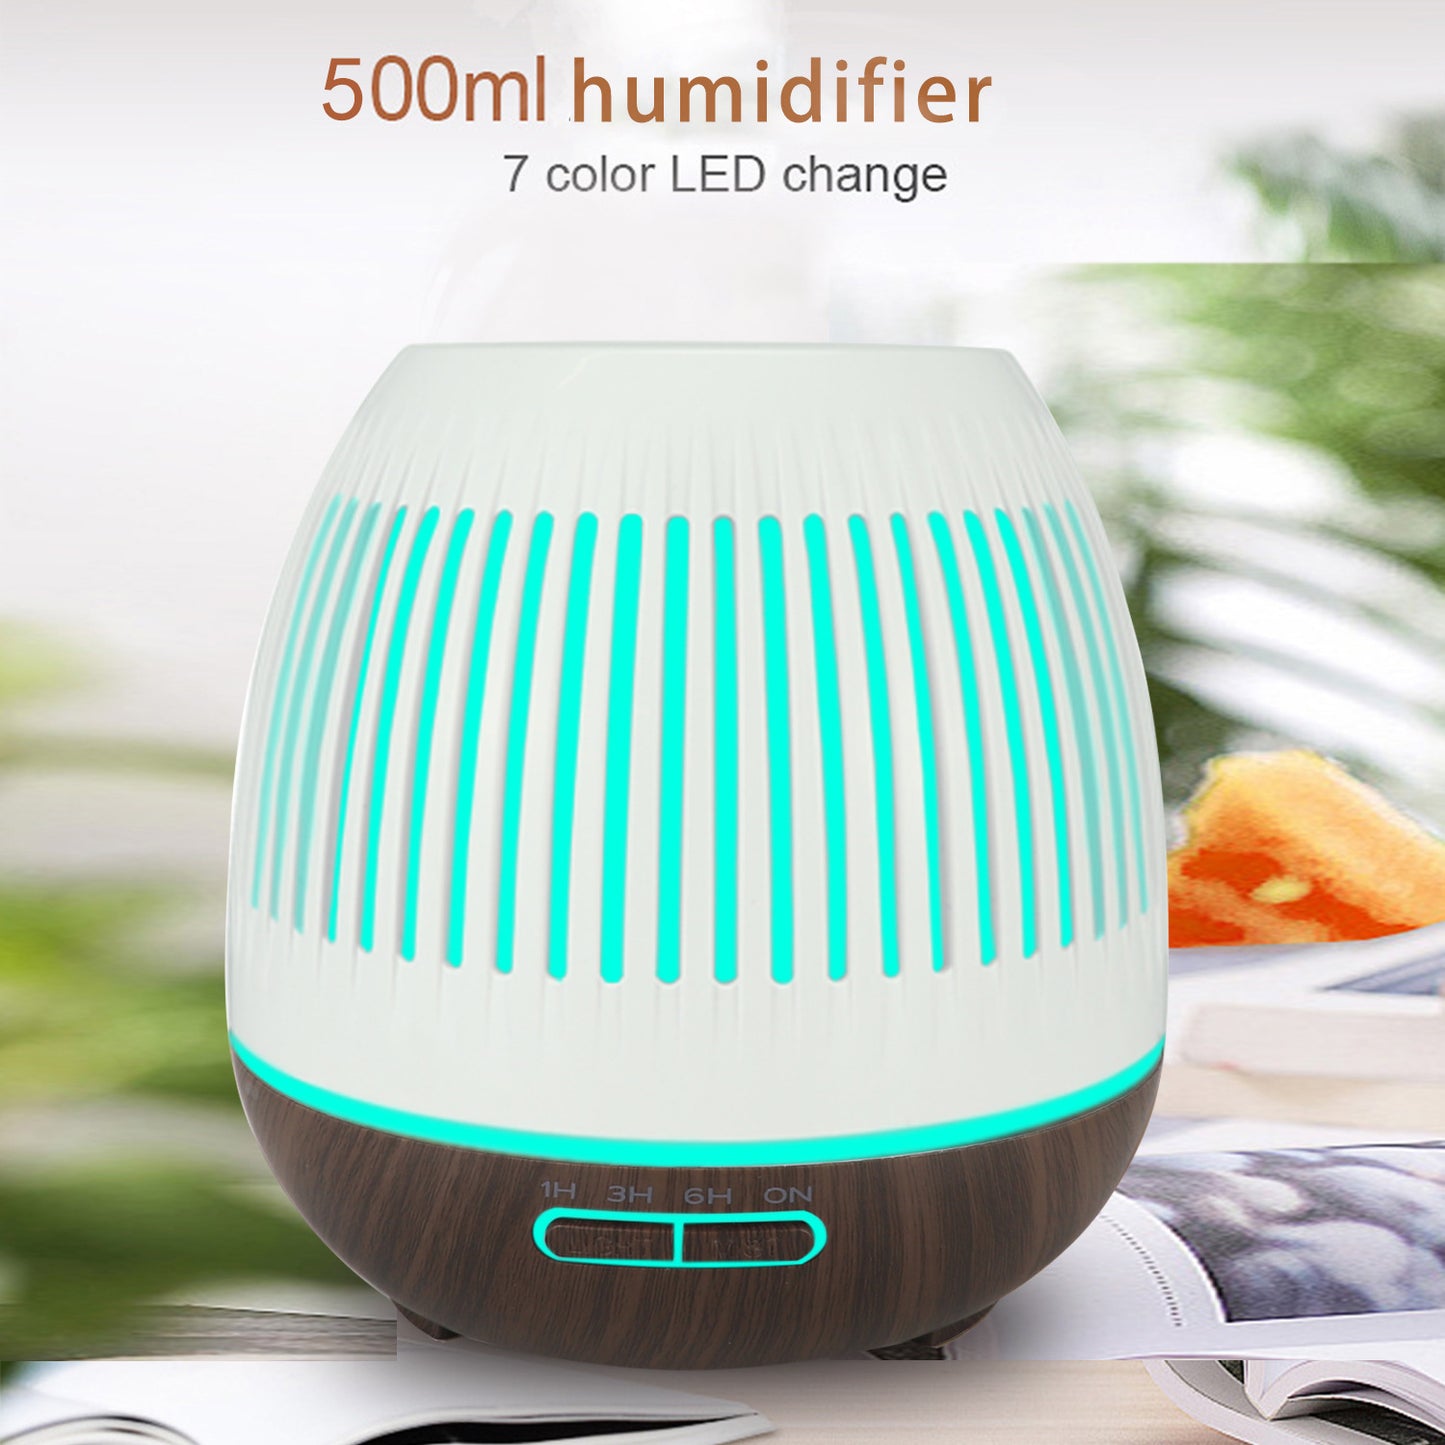 400ml humidifier hollow luminous humidifier wood grain humidifier air purifier aroma diffuser